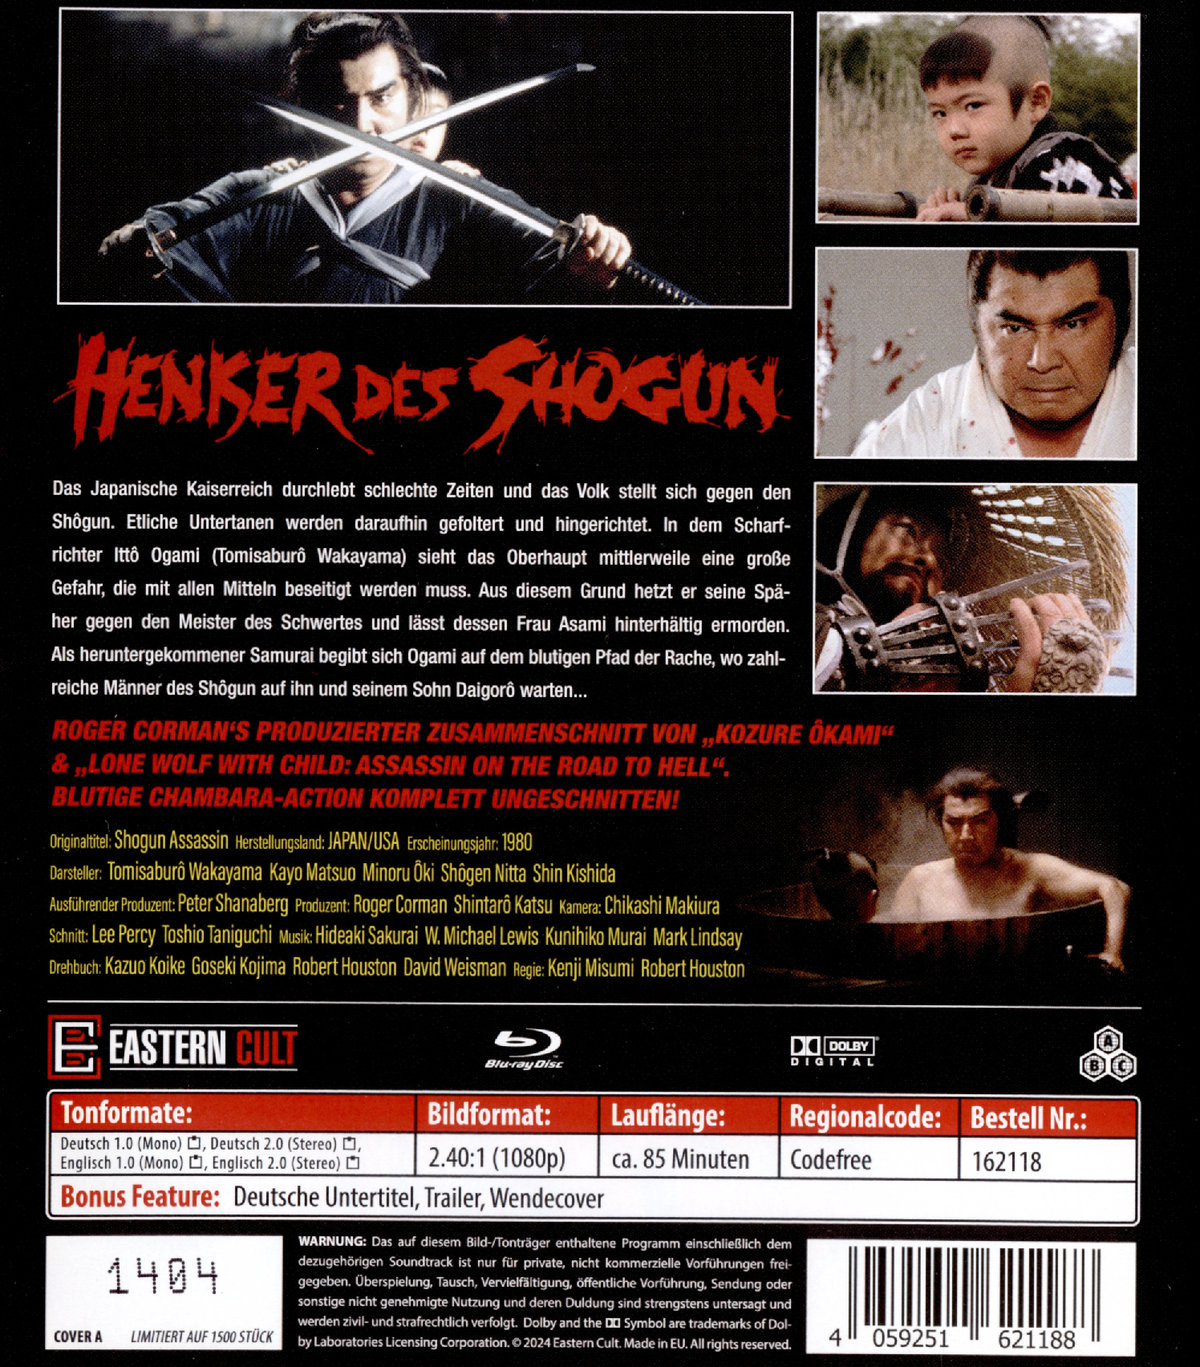 Henker des Shogun - Cover A  (Blu-ray Disc)